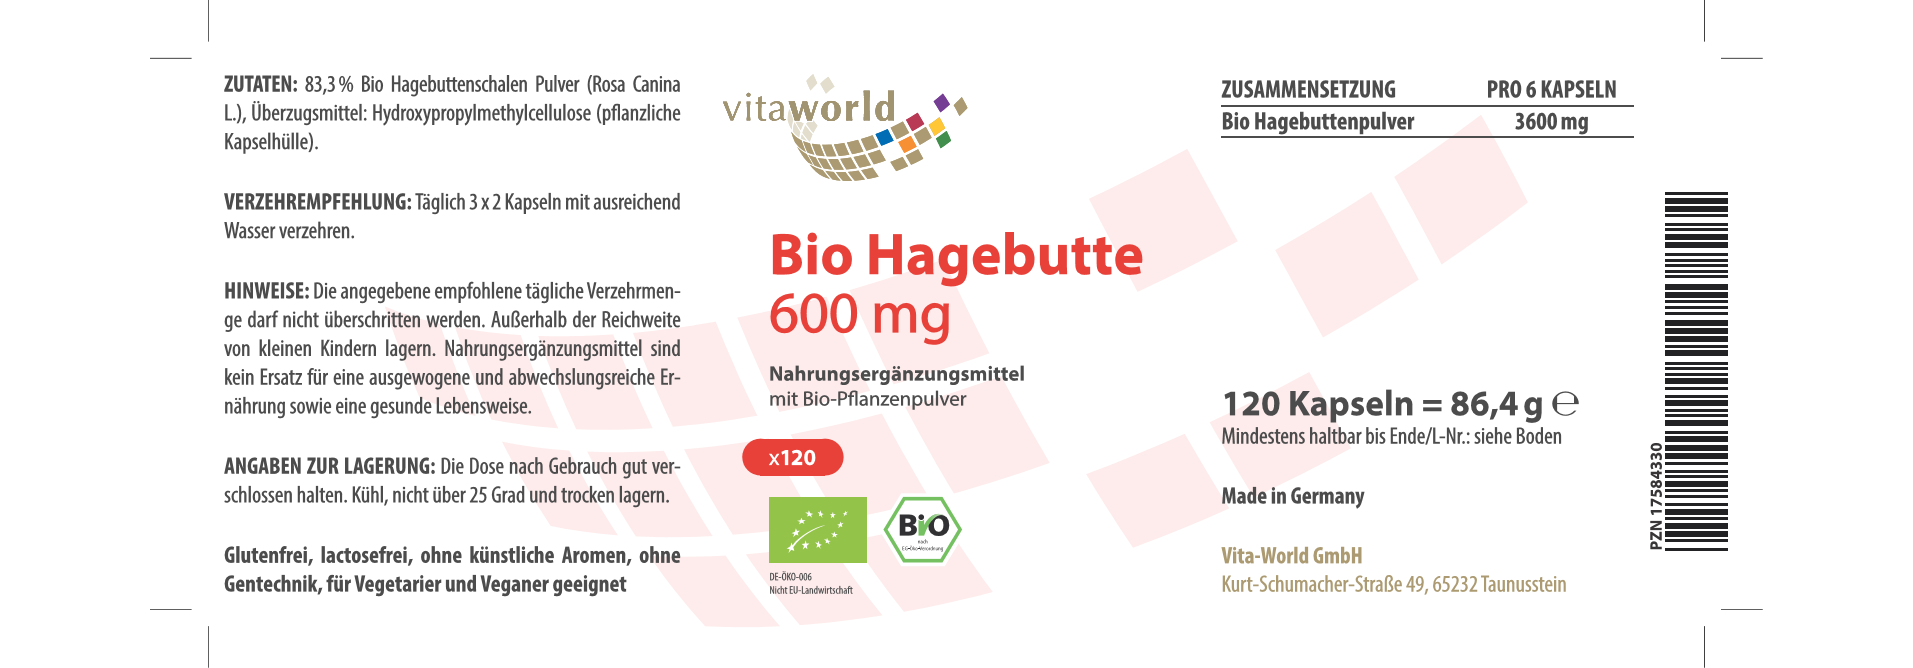 Hagebutte 600 mg Bio (120 Kps)